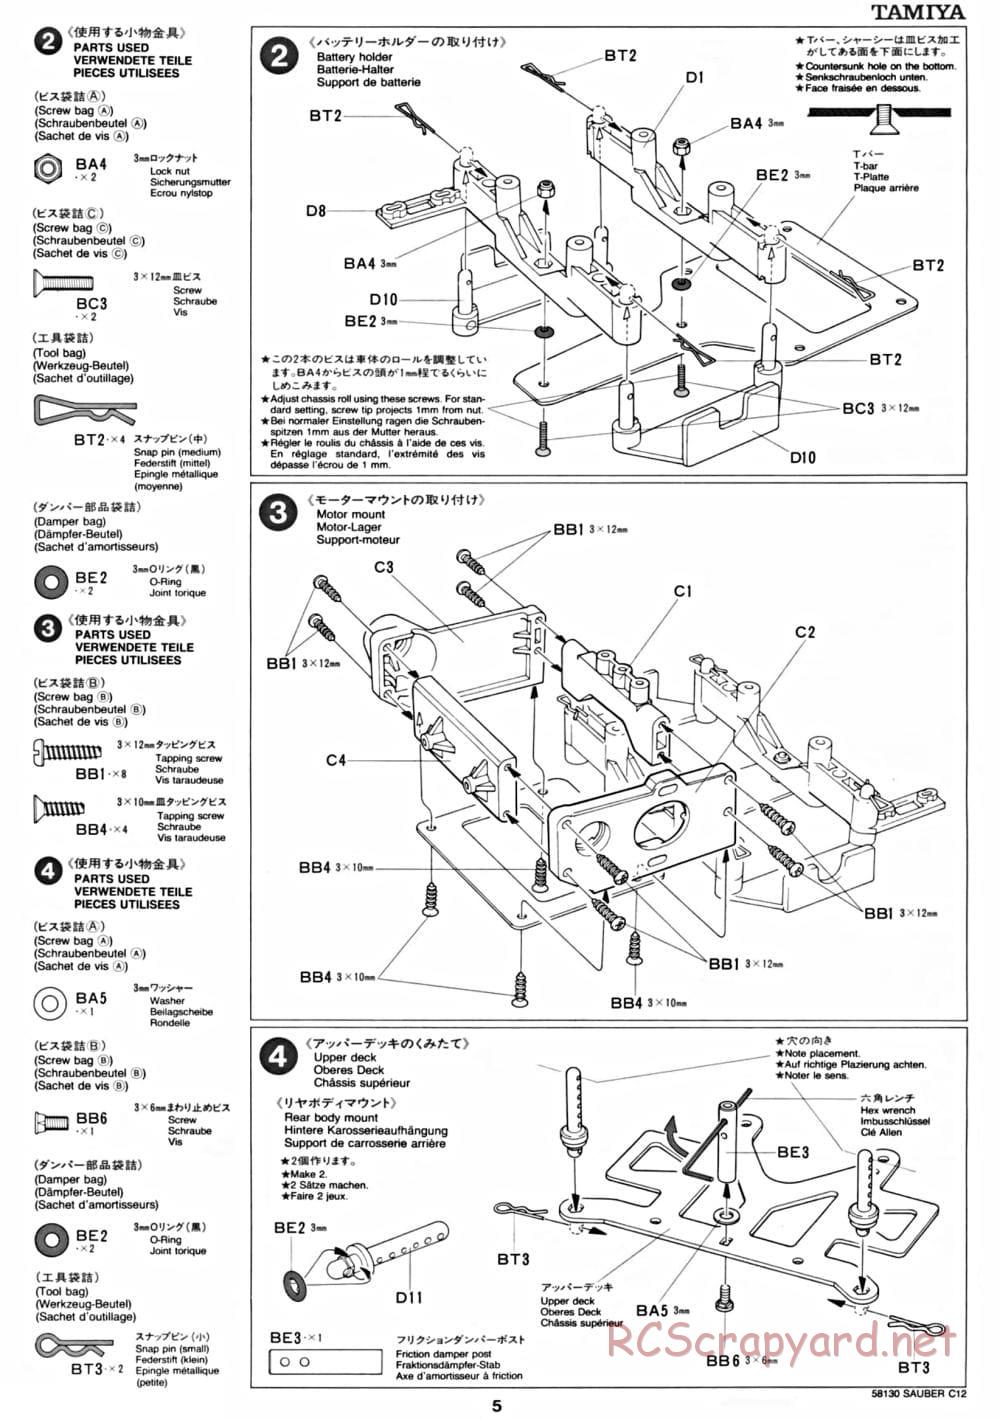 Tamiya - Sauber C12 - F103 Chassis - Manual - Page 5